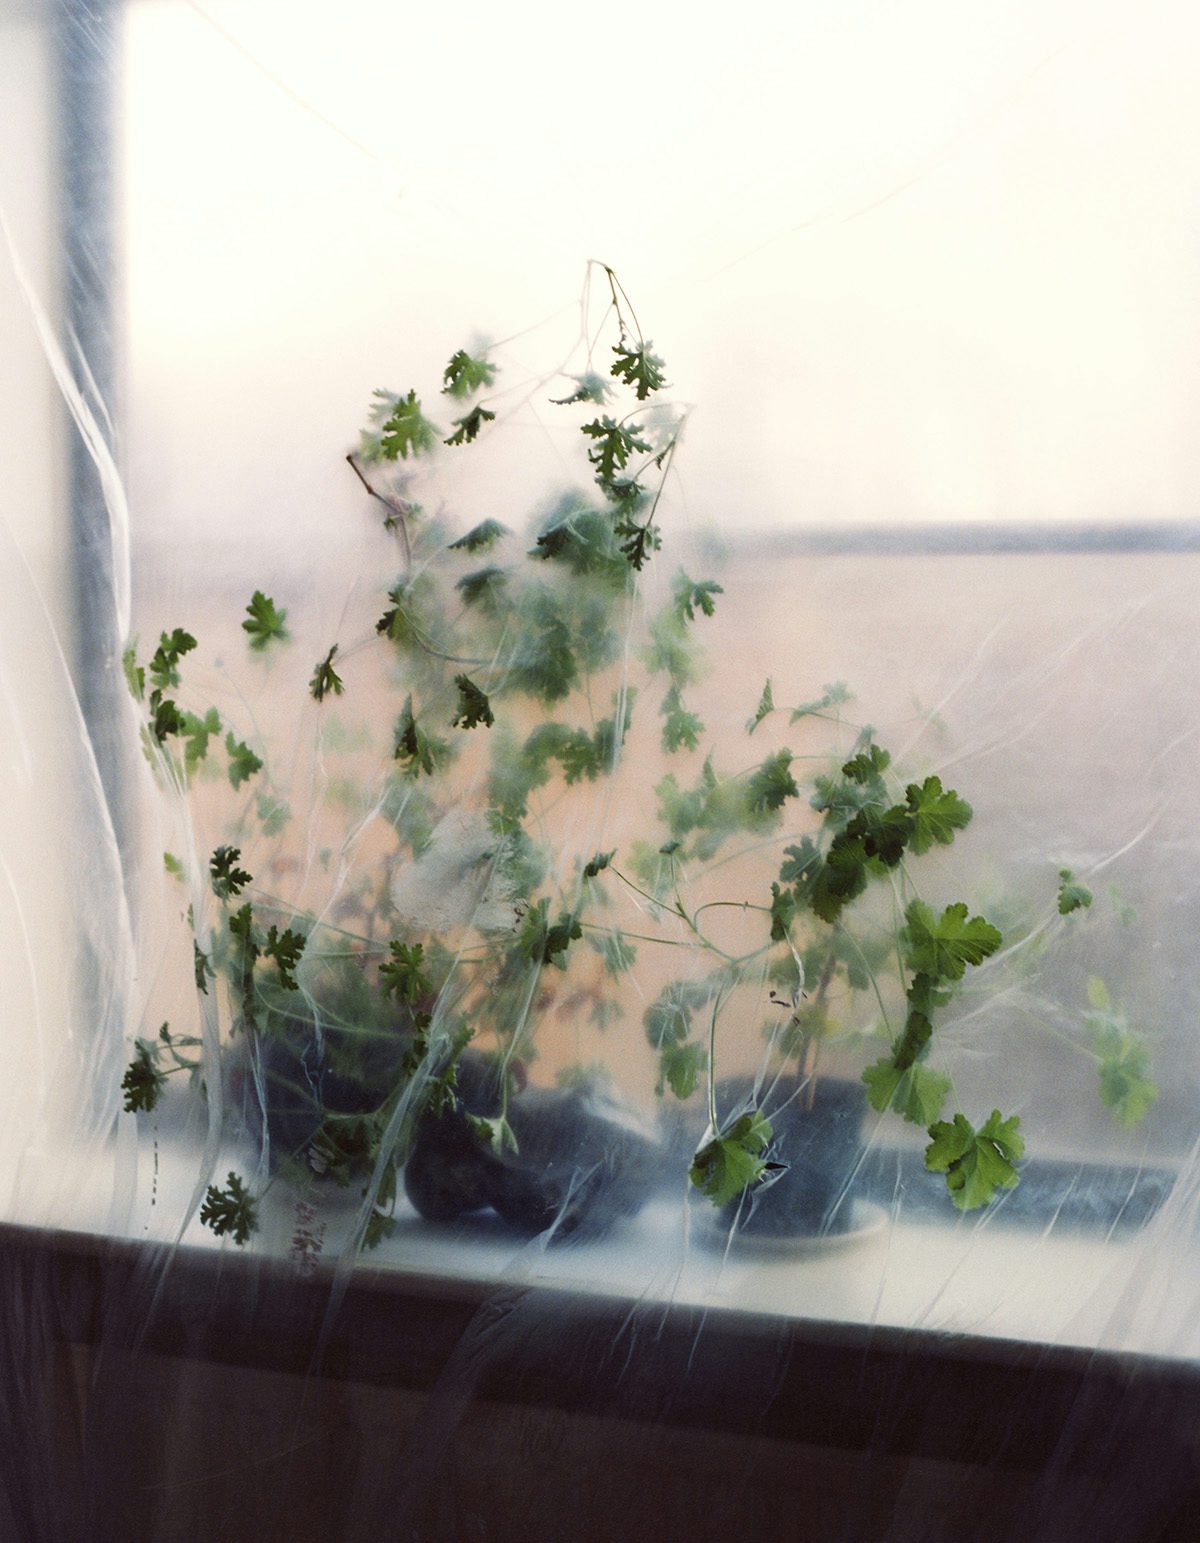 Plants on a windowsill behind a plastic screen